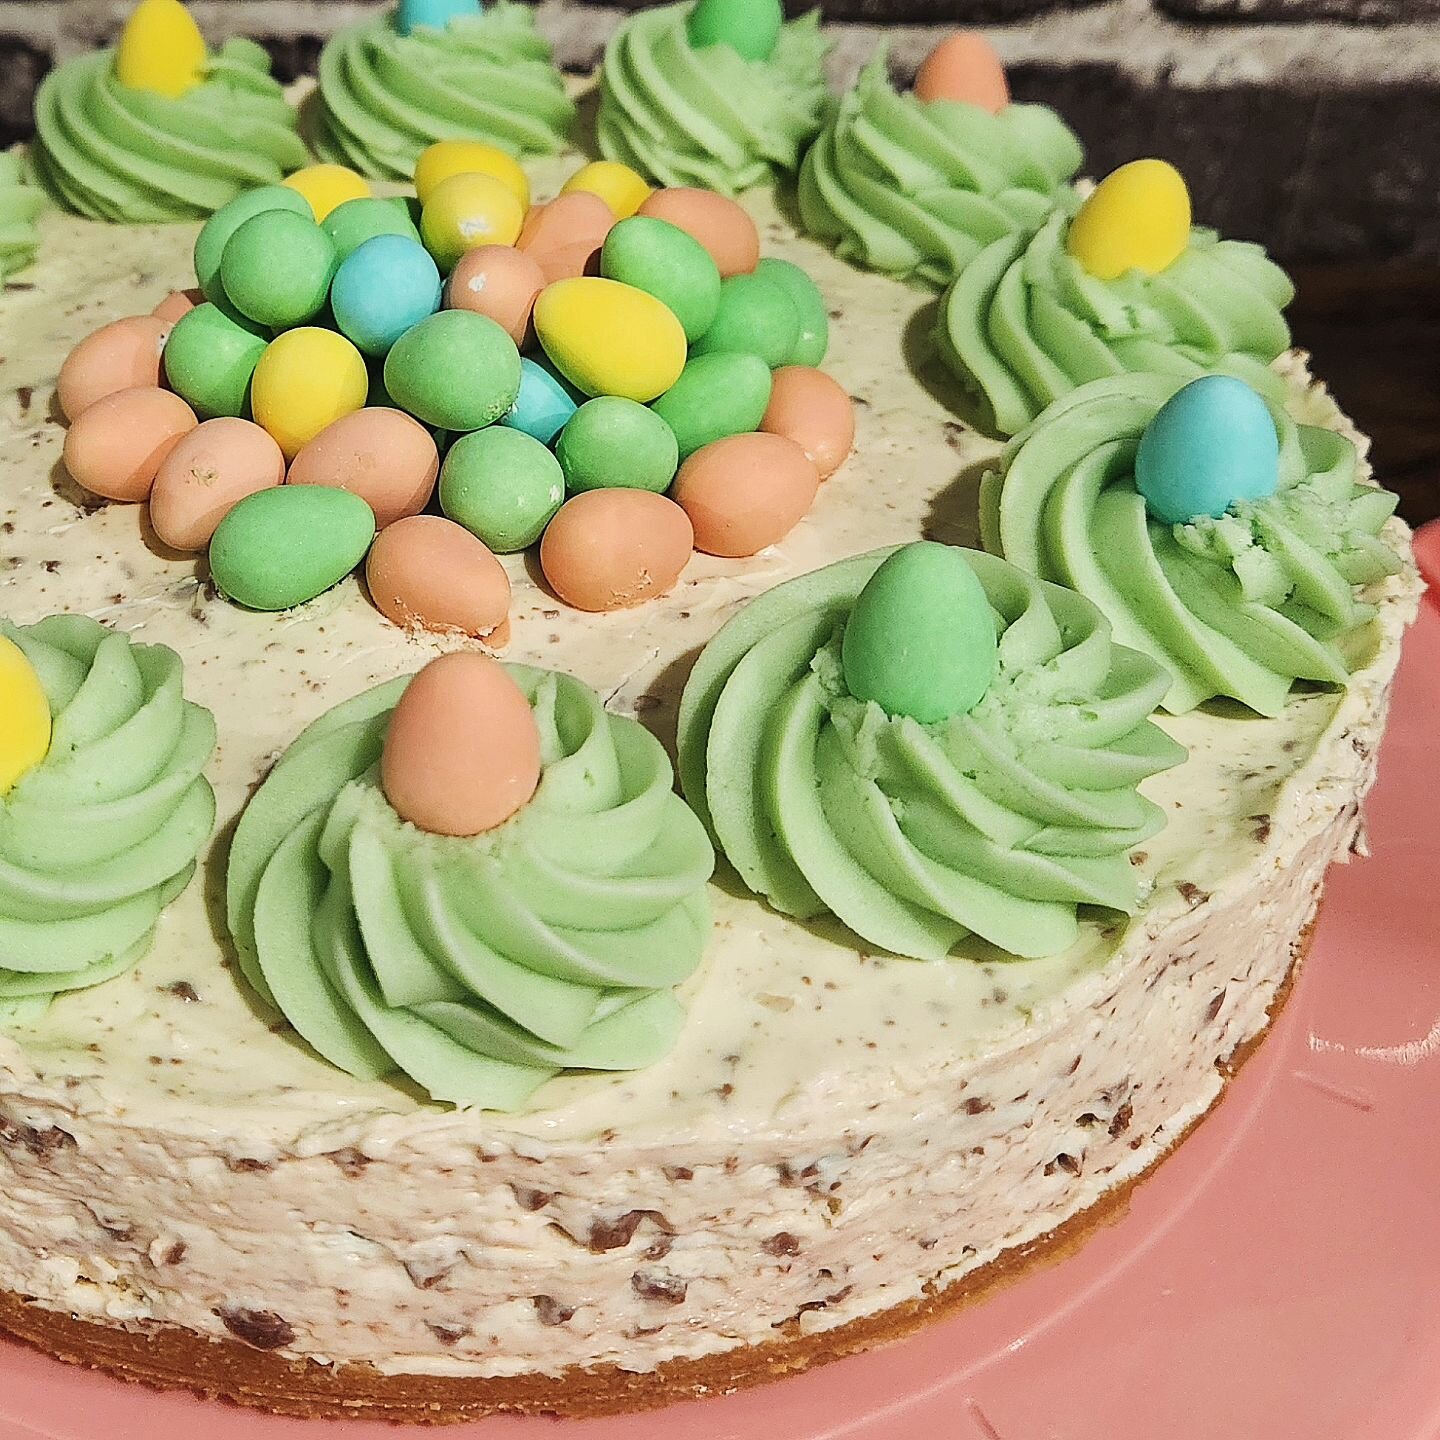 Mini Egg Cheesecake. Happy Easter!! 🐰🪺 
.
.
#desserts #dessertofinstagram #dessert #cakedecorating #cakeofinstagram #cheesecake #minieggs #miniegg #minieggcheesecake #Easter #cakedecorator #cakedesign #happyeaster #happyeaster🐰